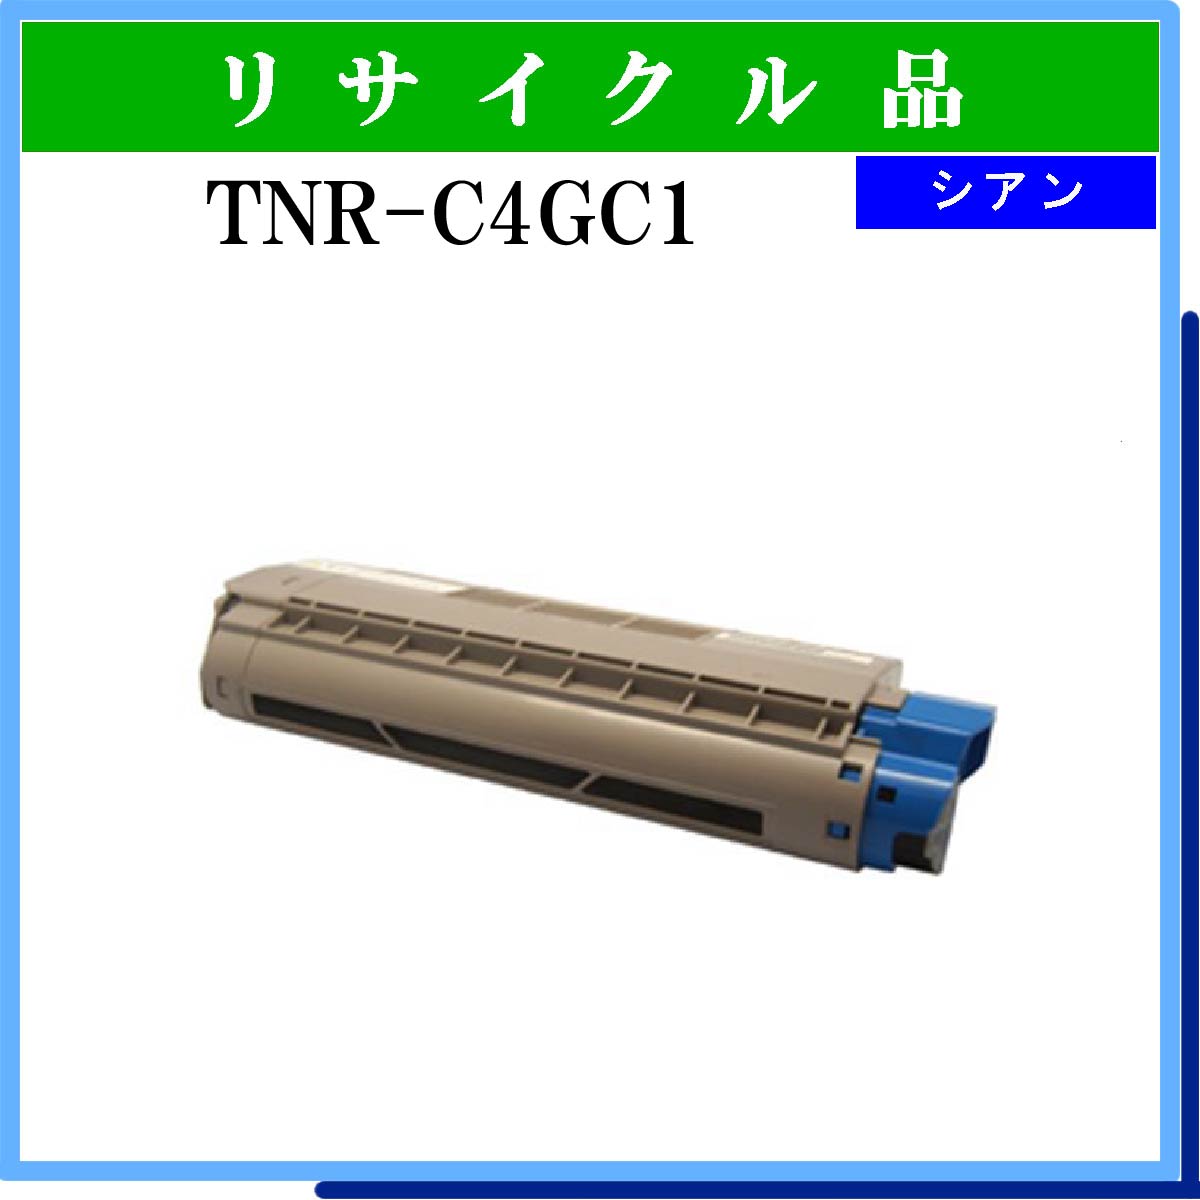 TNR-C4GC1 - ウインドウを閉じる